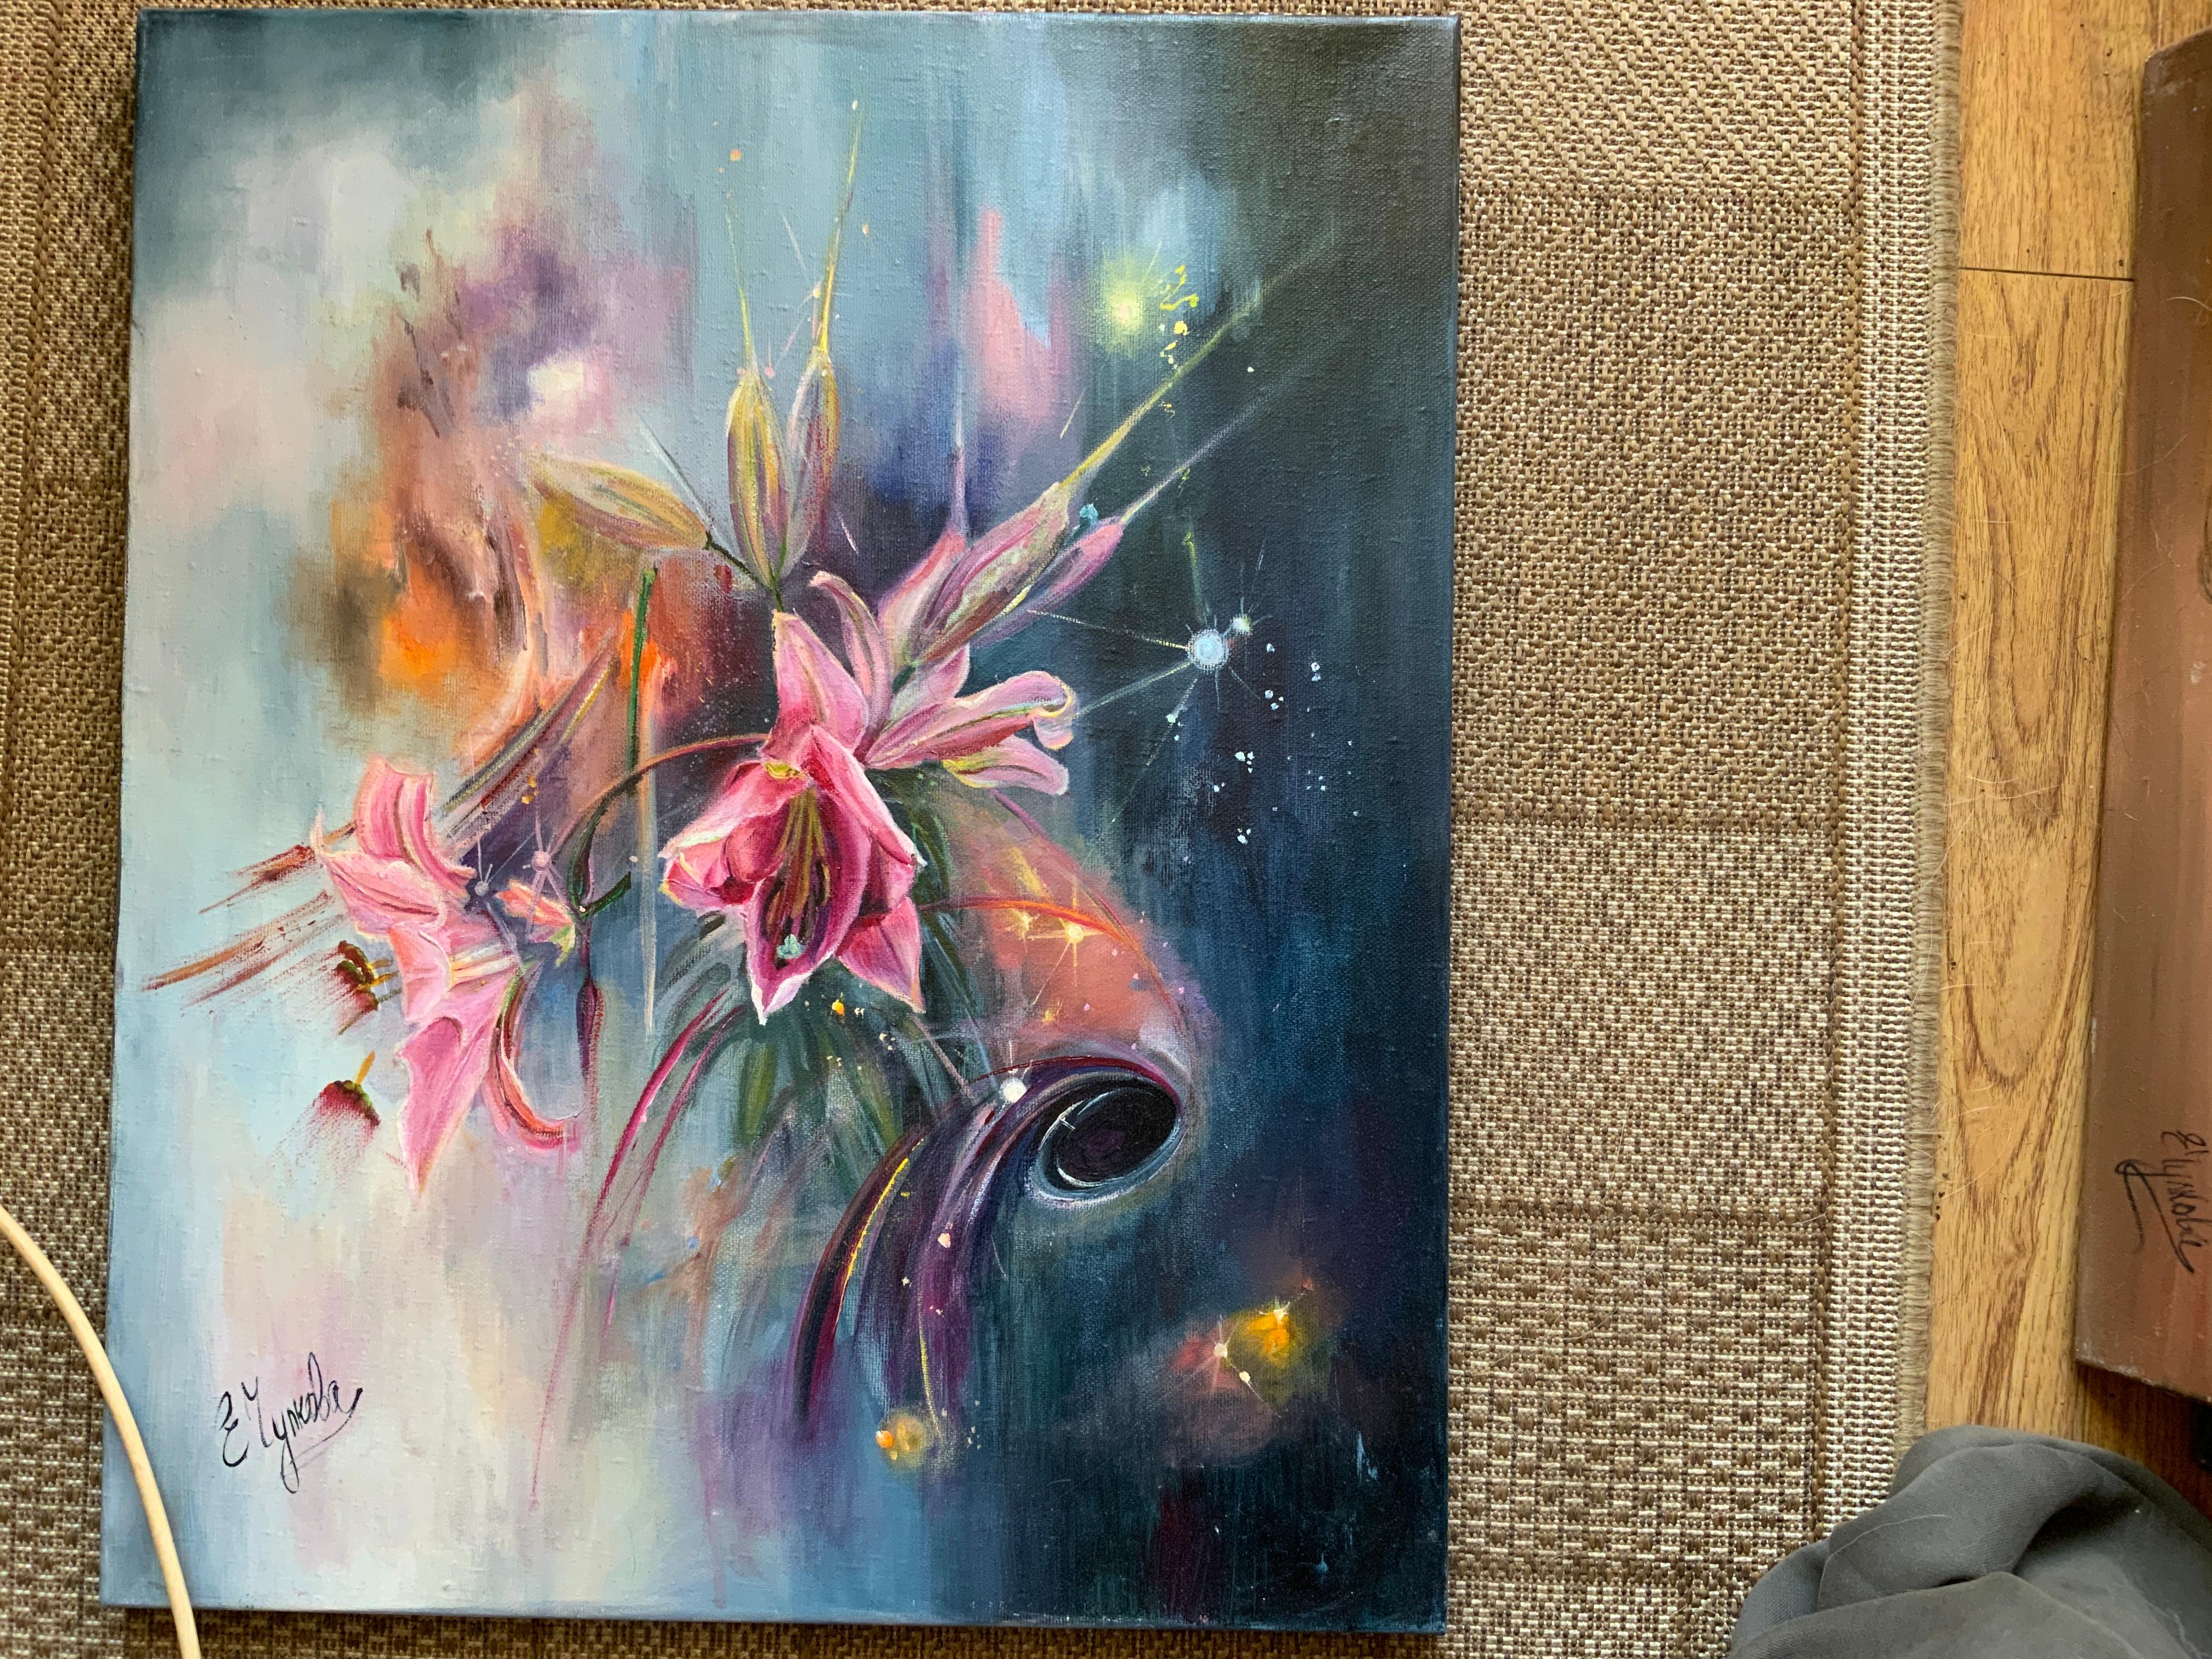 The birth of flora 2 - Impressionist Painting by Chulkova Elena